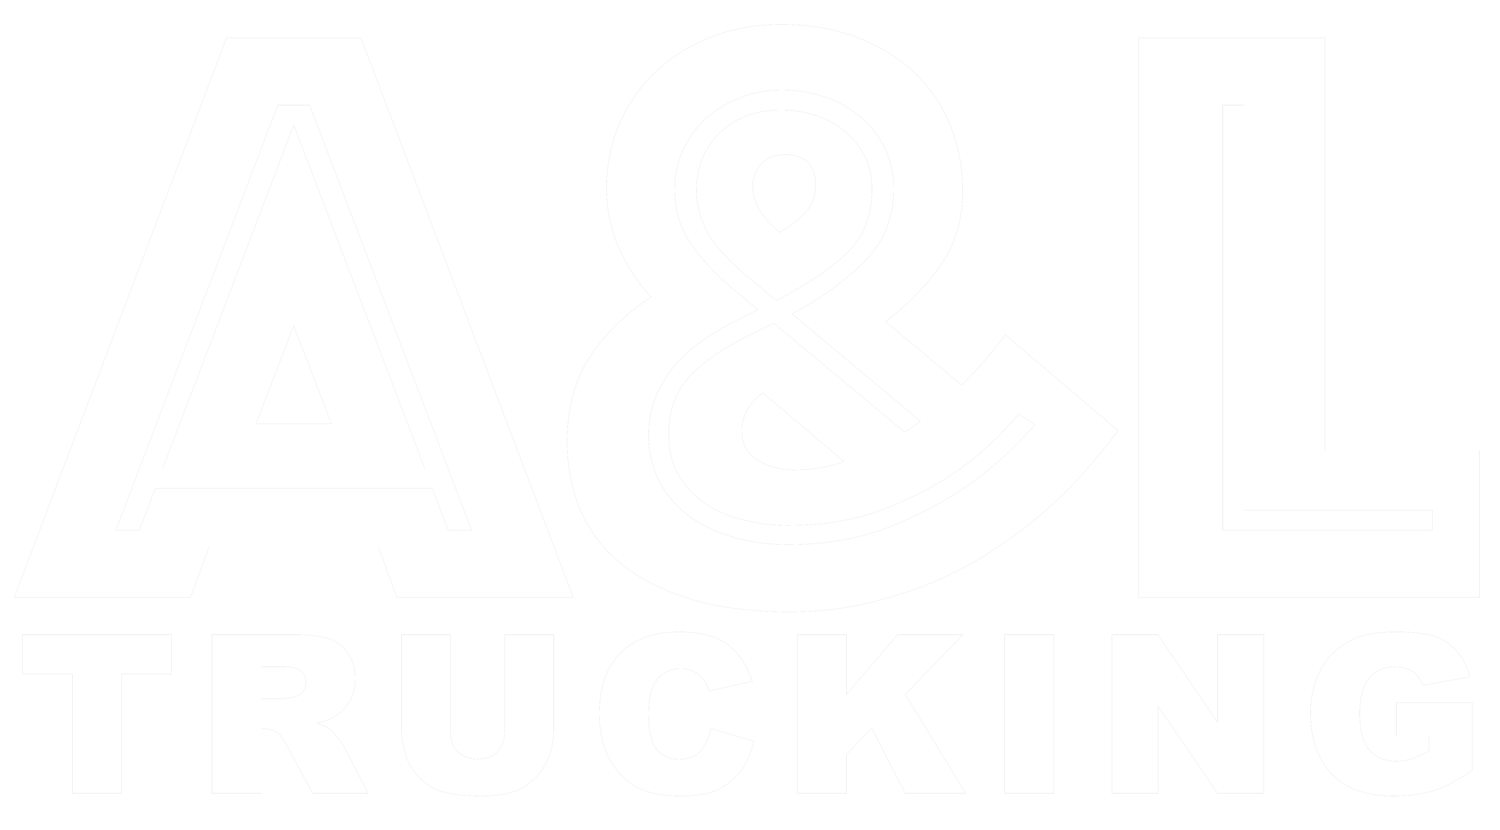 Nashville Trucking